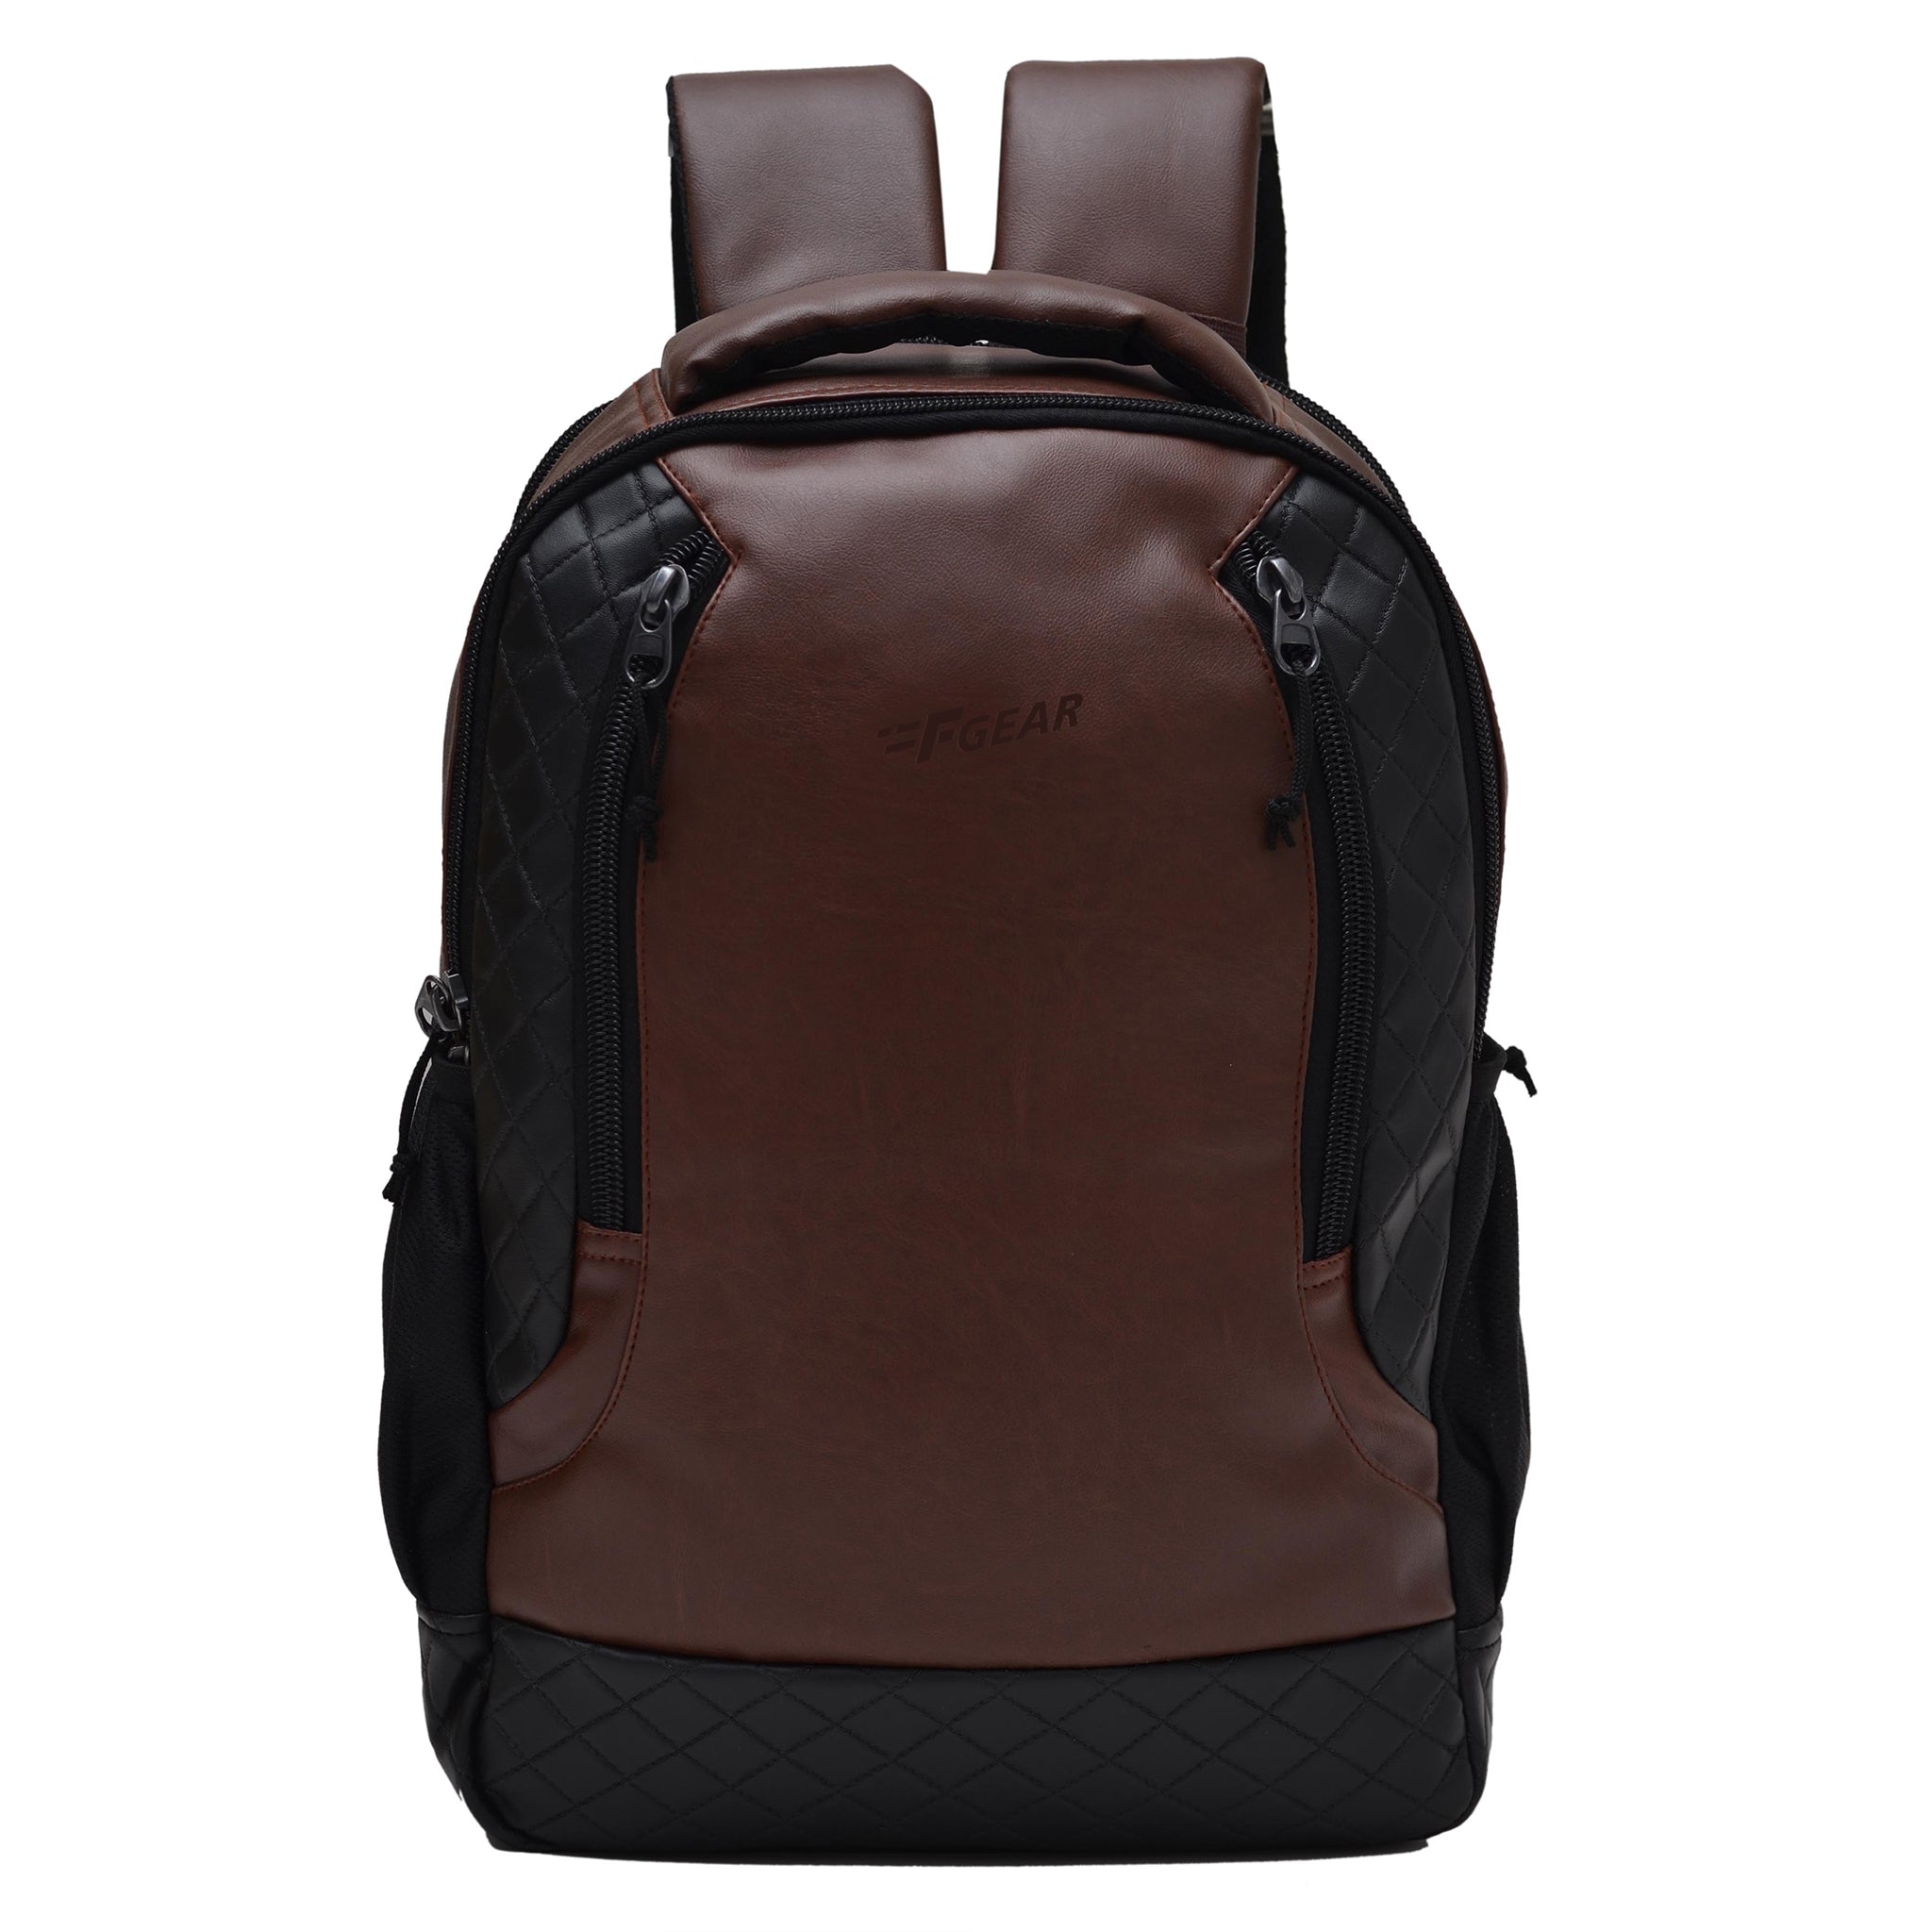 Olive Green Leather Backpack, Women Laptop Backpack, #bagsandpurses # backpack @EtsyMktgTool #leatherbackpack #laptopbackpack #travelbackpack